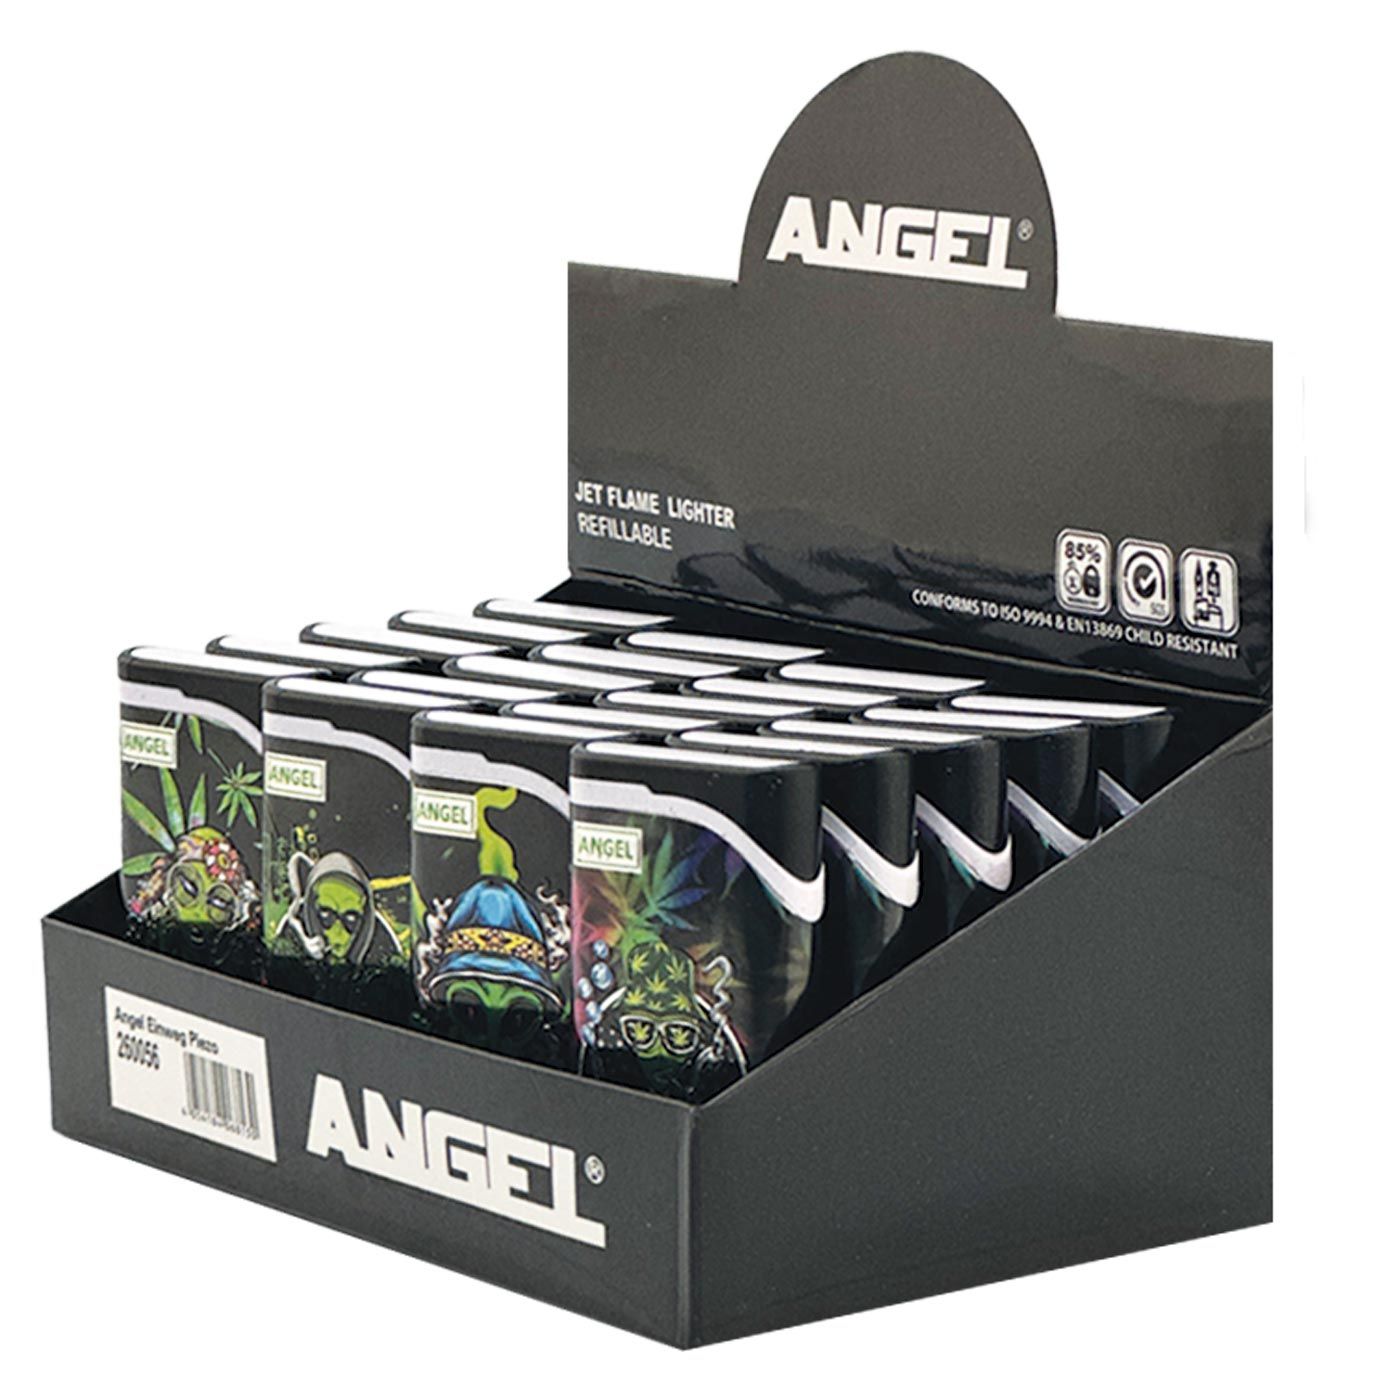 Display Angel Jet Flame Lighters 20 Pcs